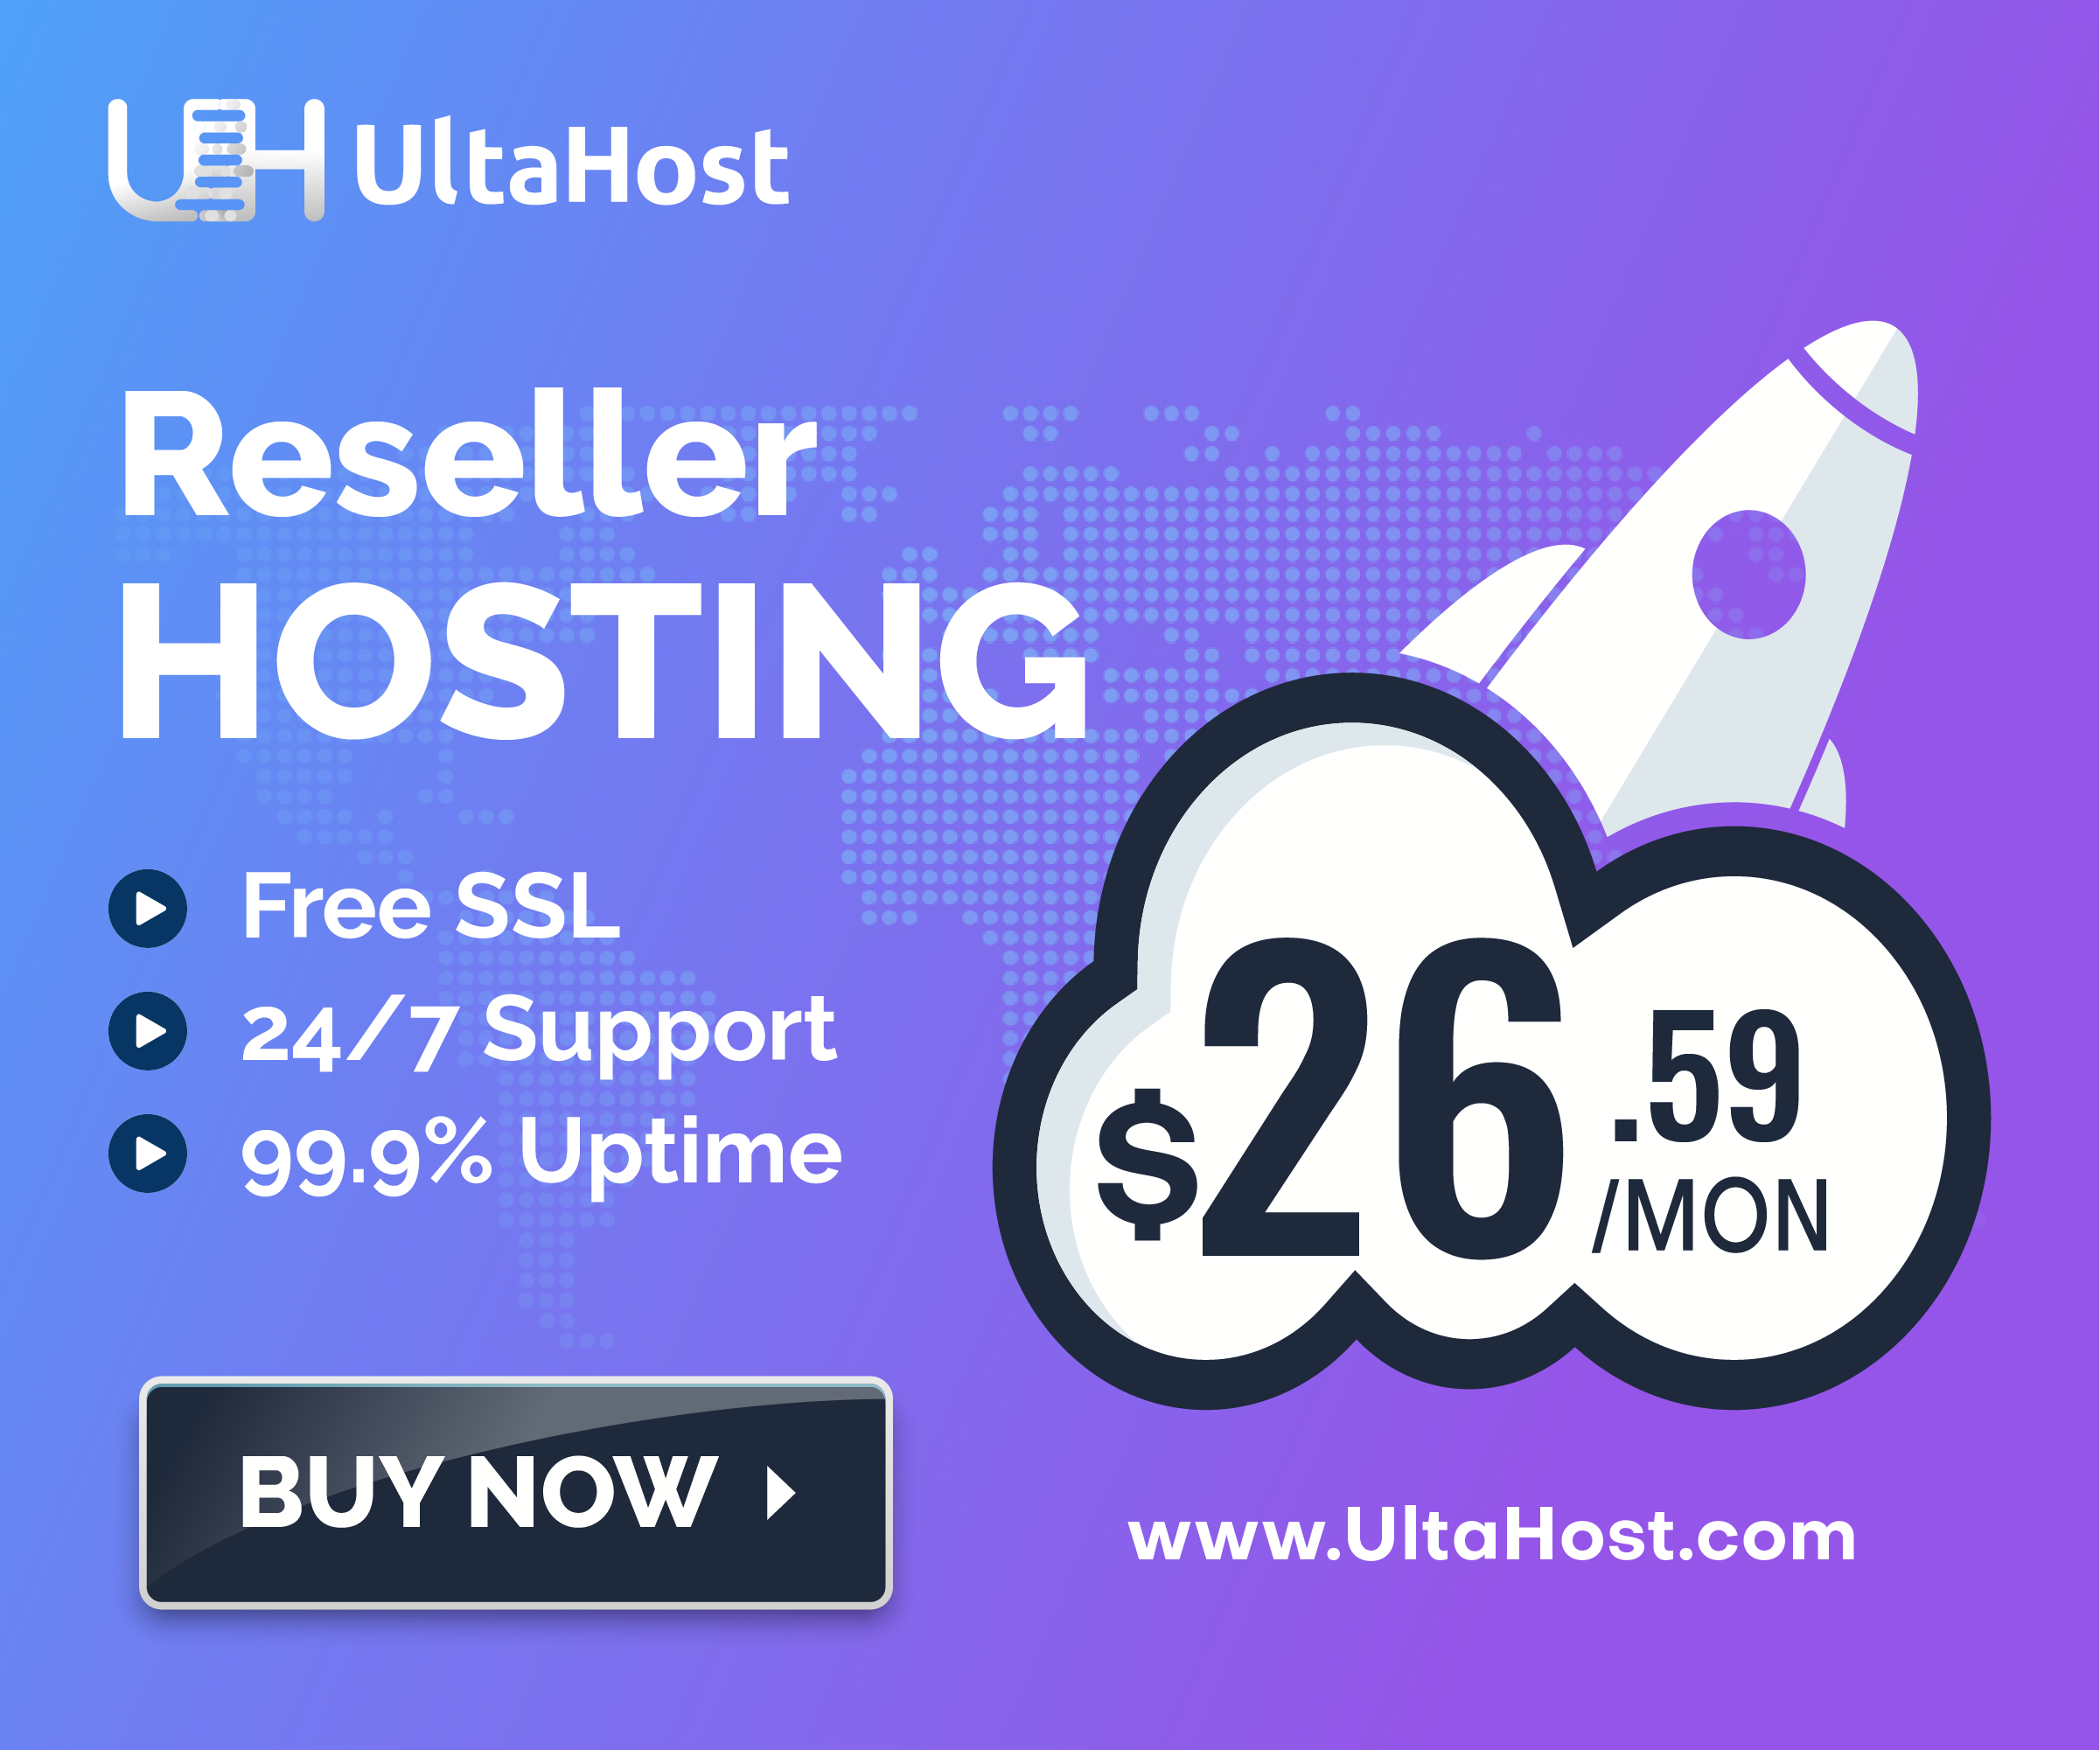 ultahost_cheap_reseller_hosting_336x280